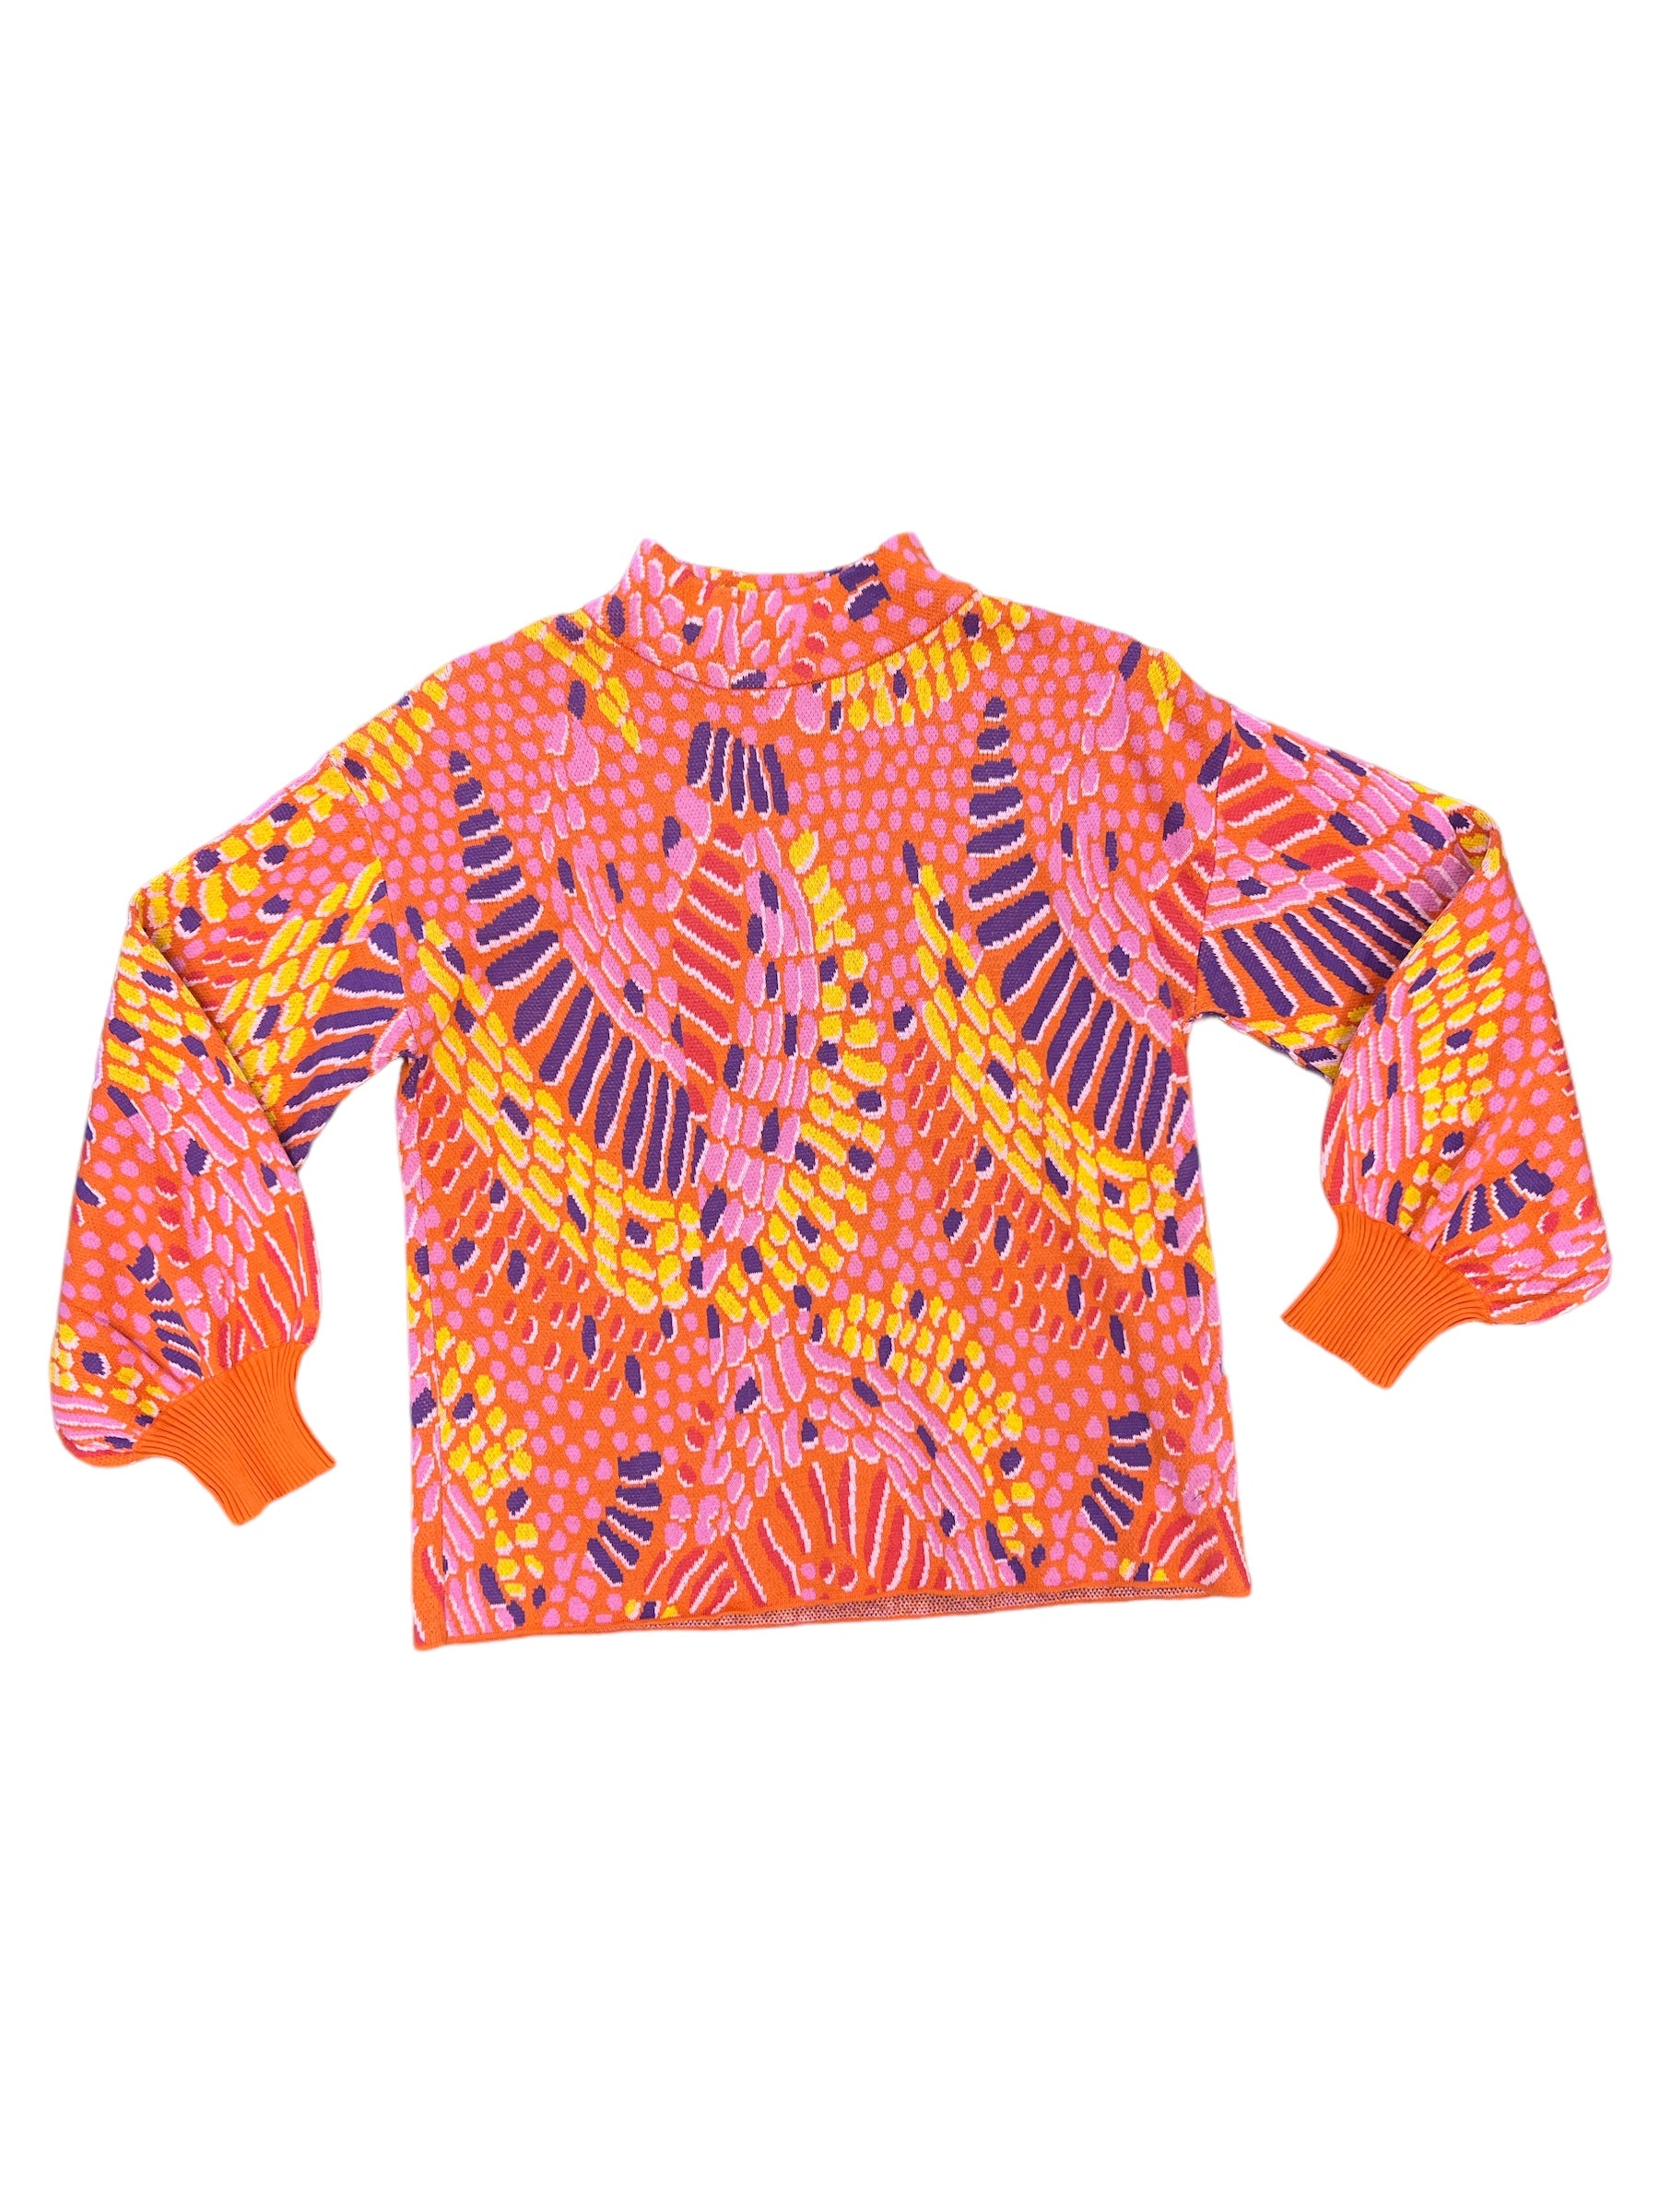 Lani Mock Sweater-140 Sweaters, Cardigans & Sweatshirts-Simply Stylish Boutique-Simply Stylish Boutique | Women’s & Kid’s Fashion | Paducah, KY